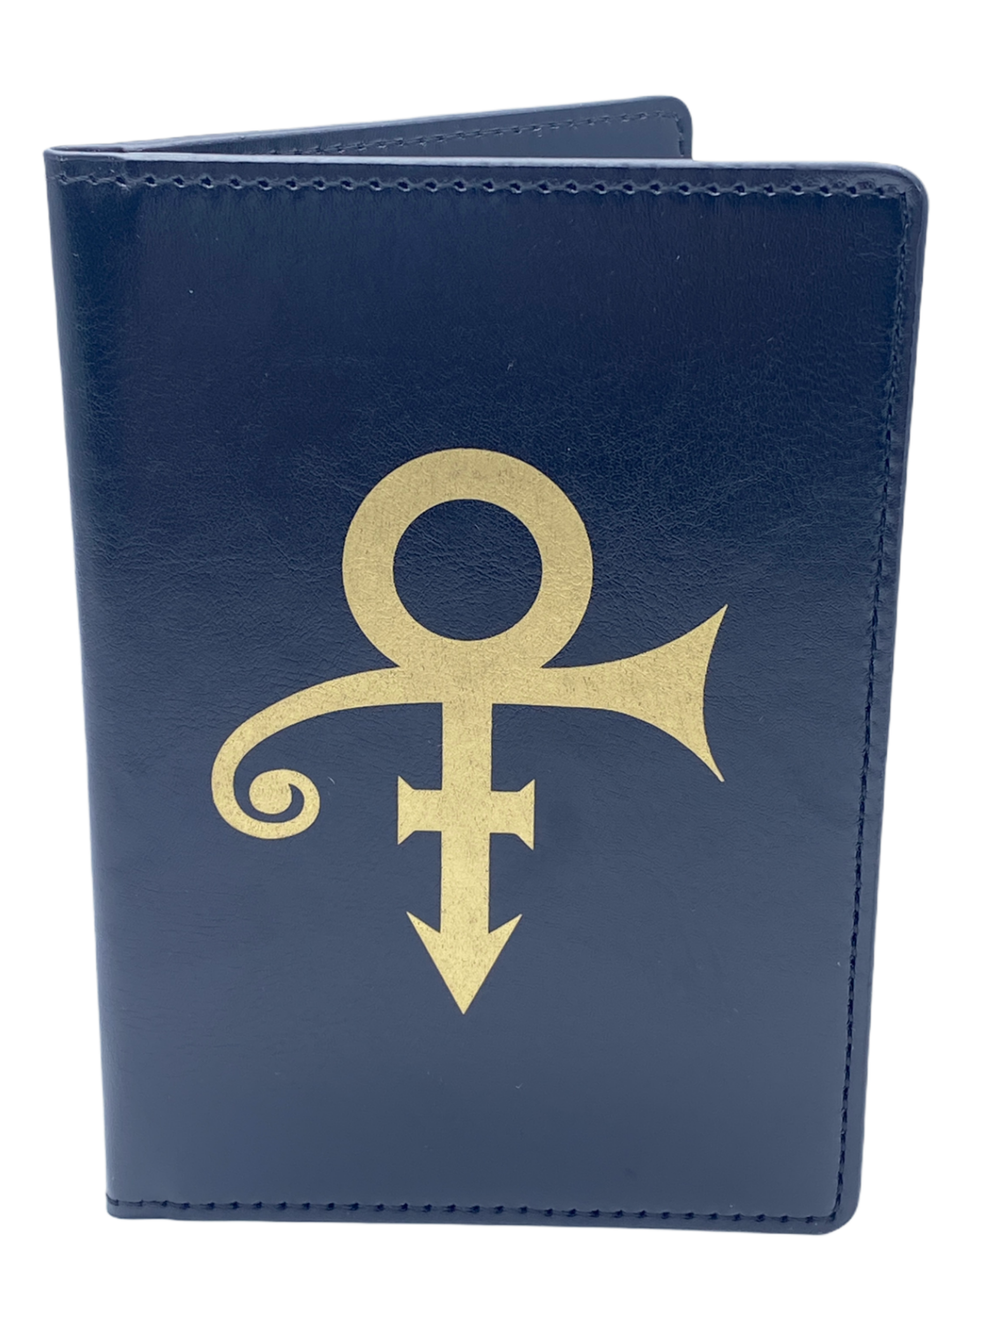 Prince – Official Merchandise Black Passport Holder Gold Love Symbol Brand New